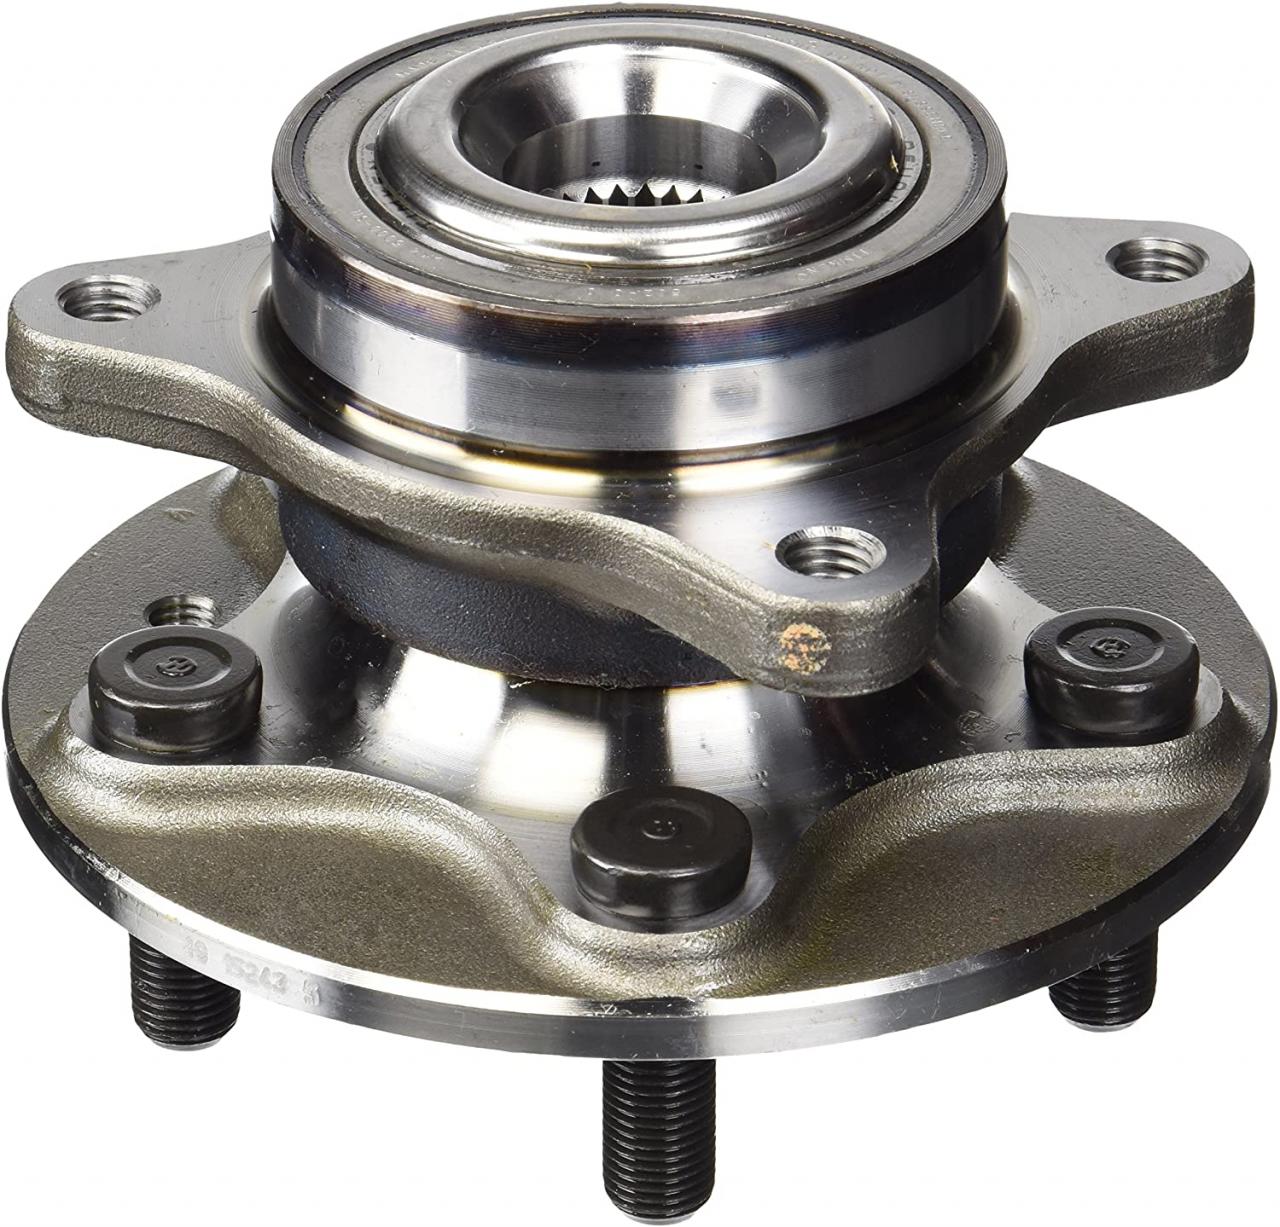 Formed Hub Wheel Bearings | The Timken Company